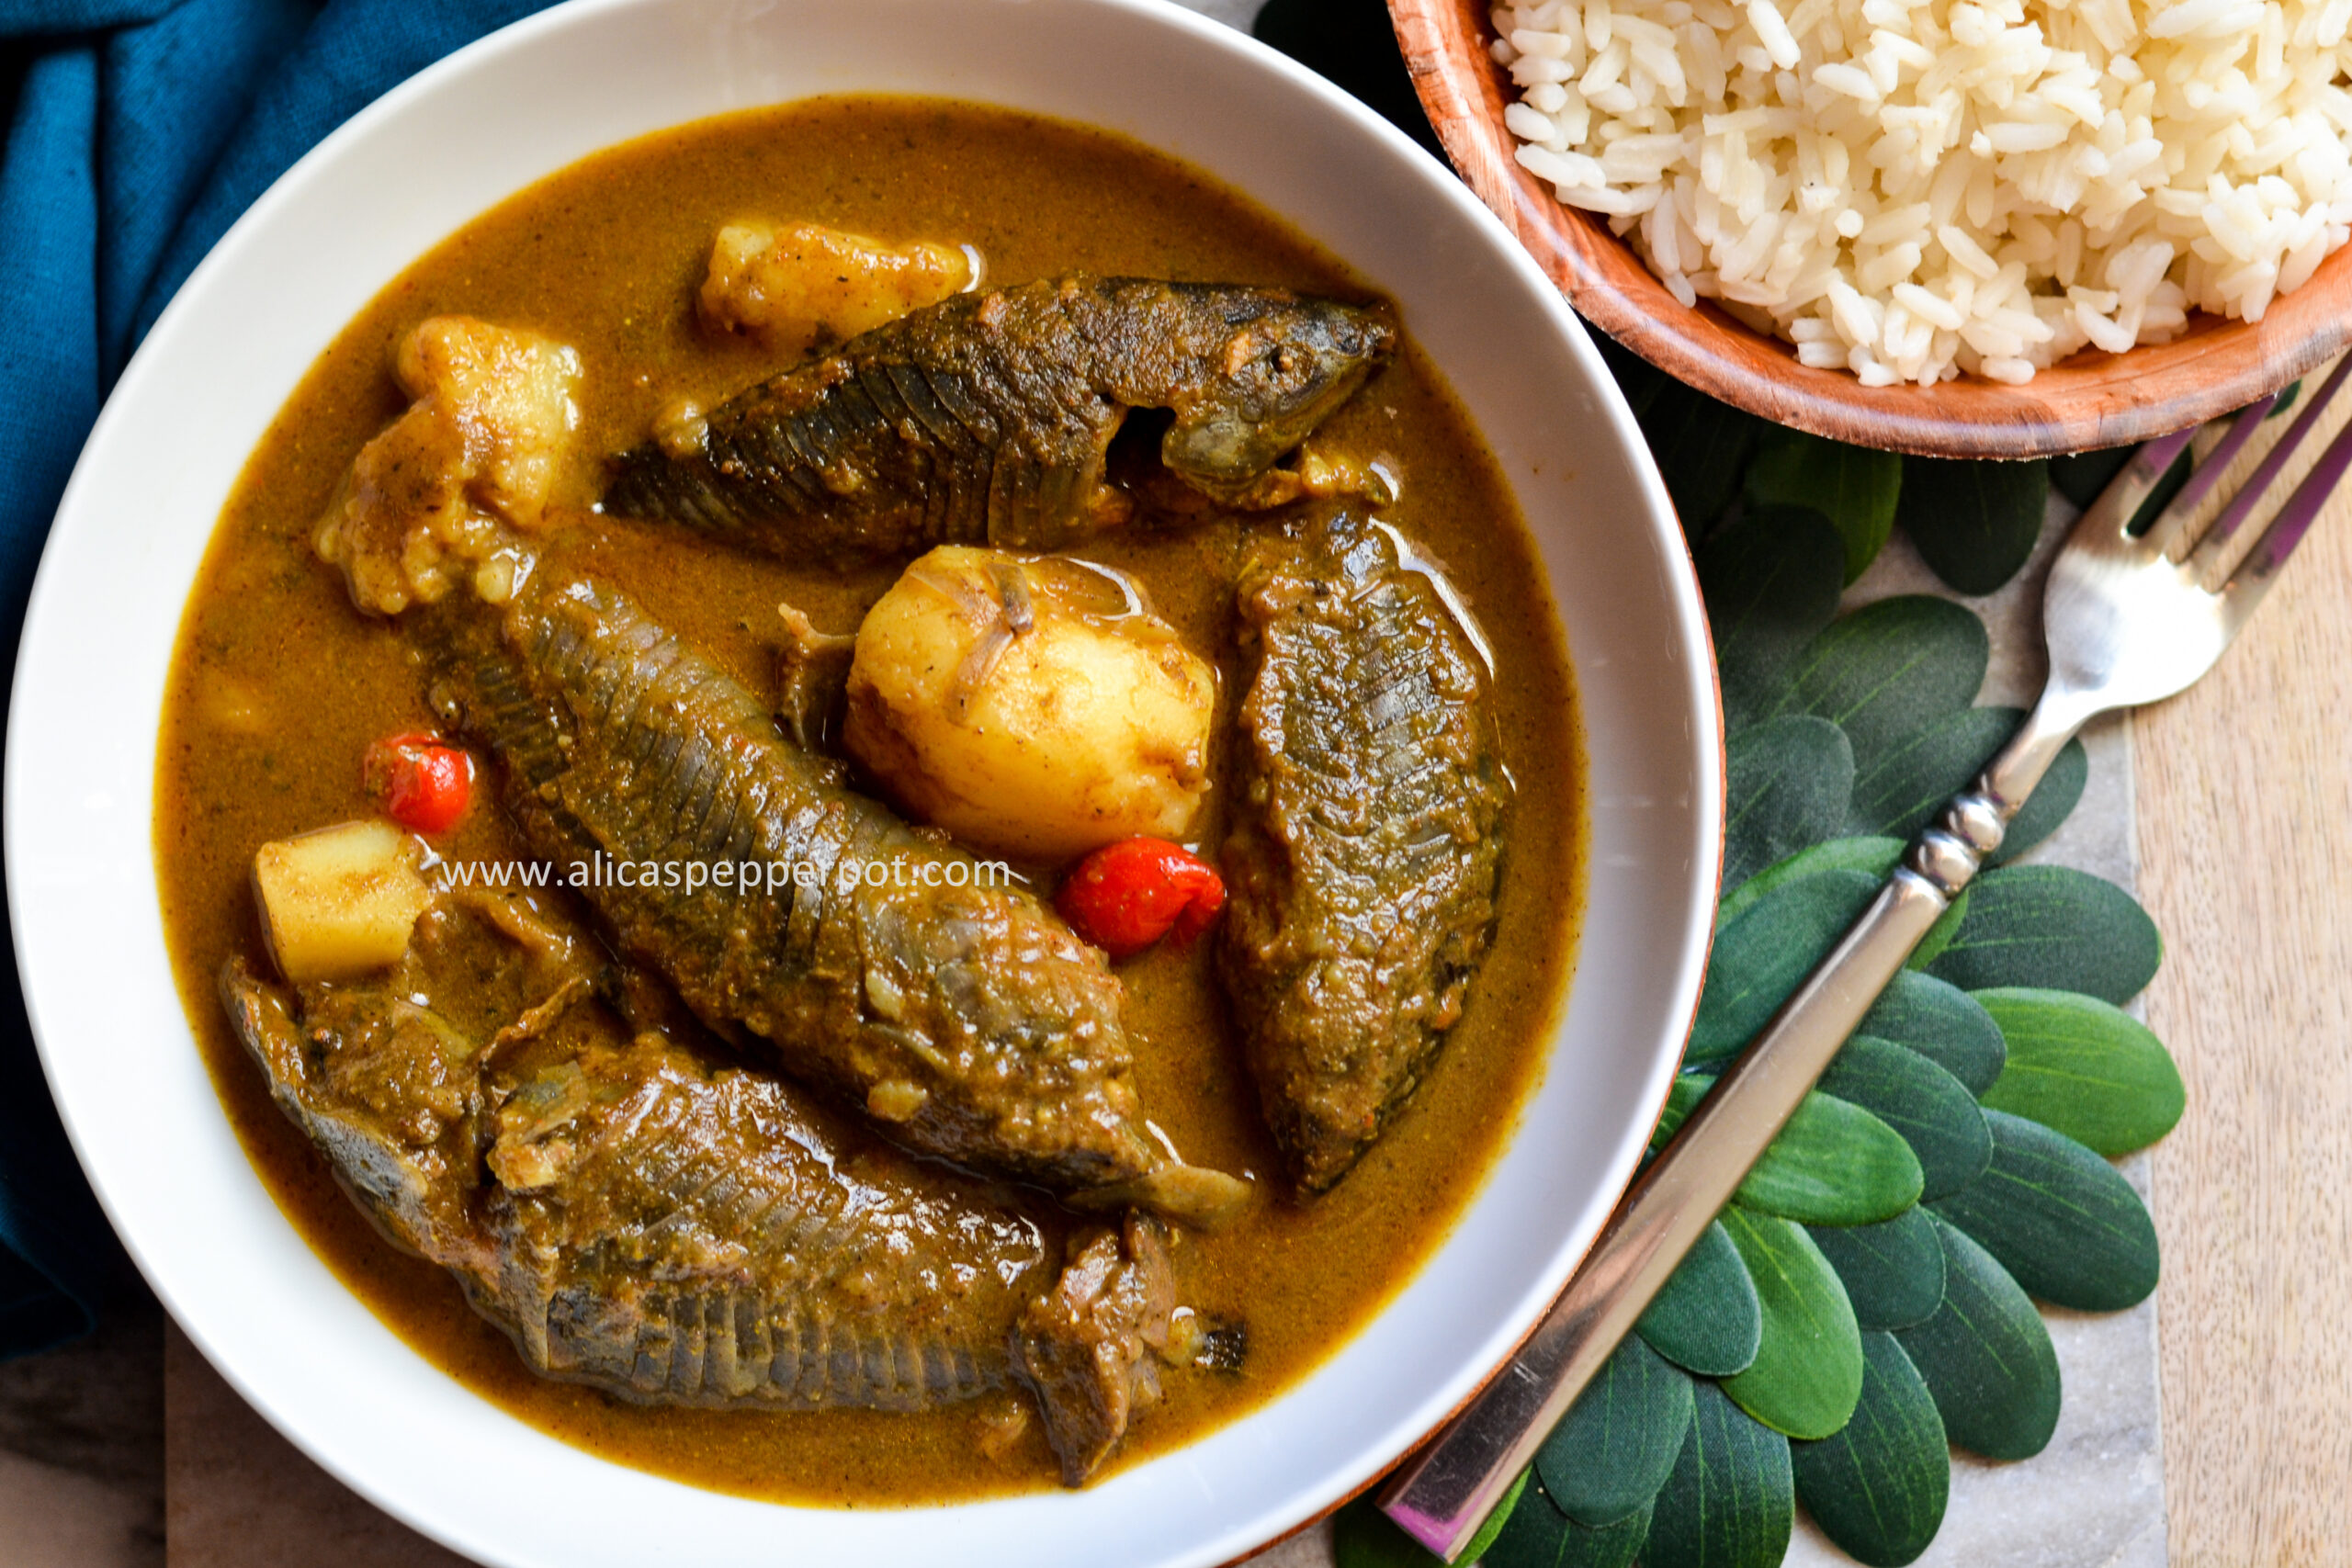 Hassar curry (armor catfish) - Alica's Pepperpot